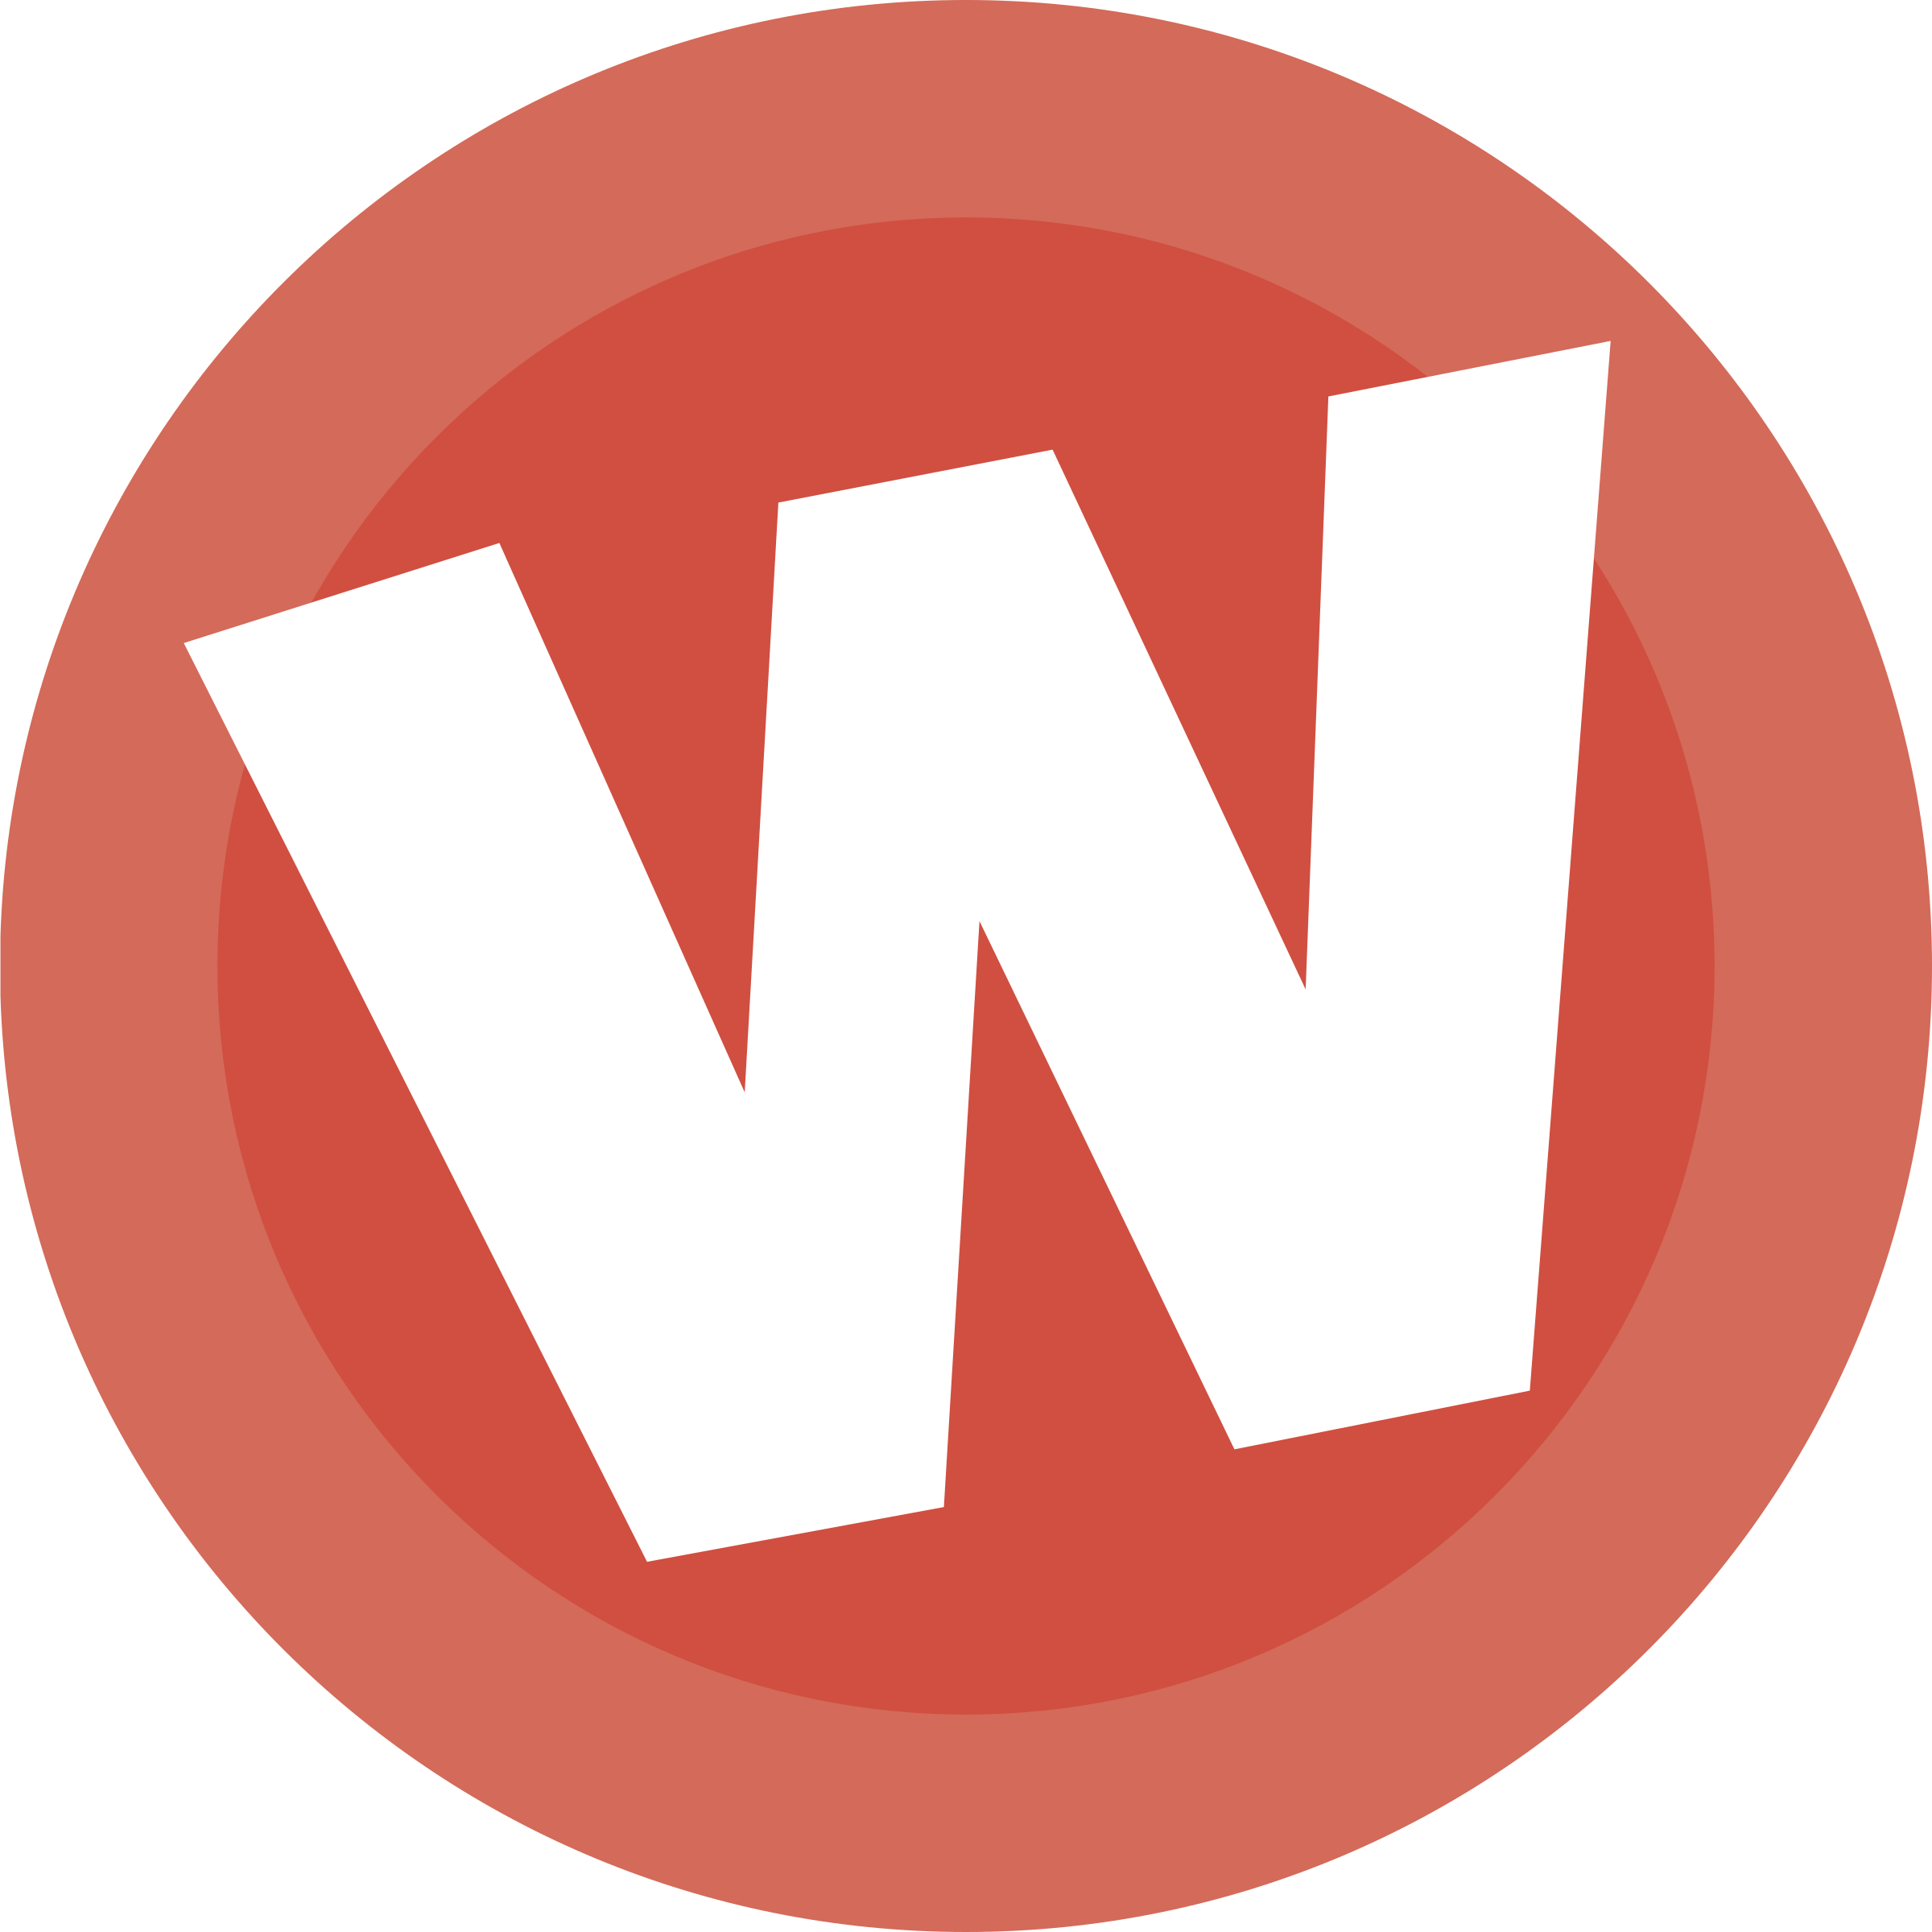 Wufoo Logo - Wufoo Logo PNG Transparent & SVG Vector